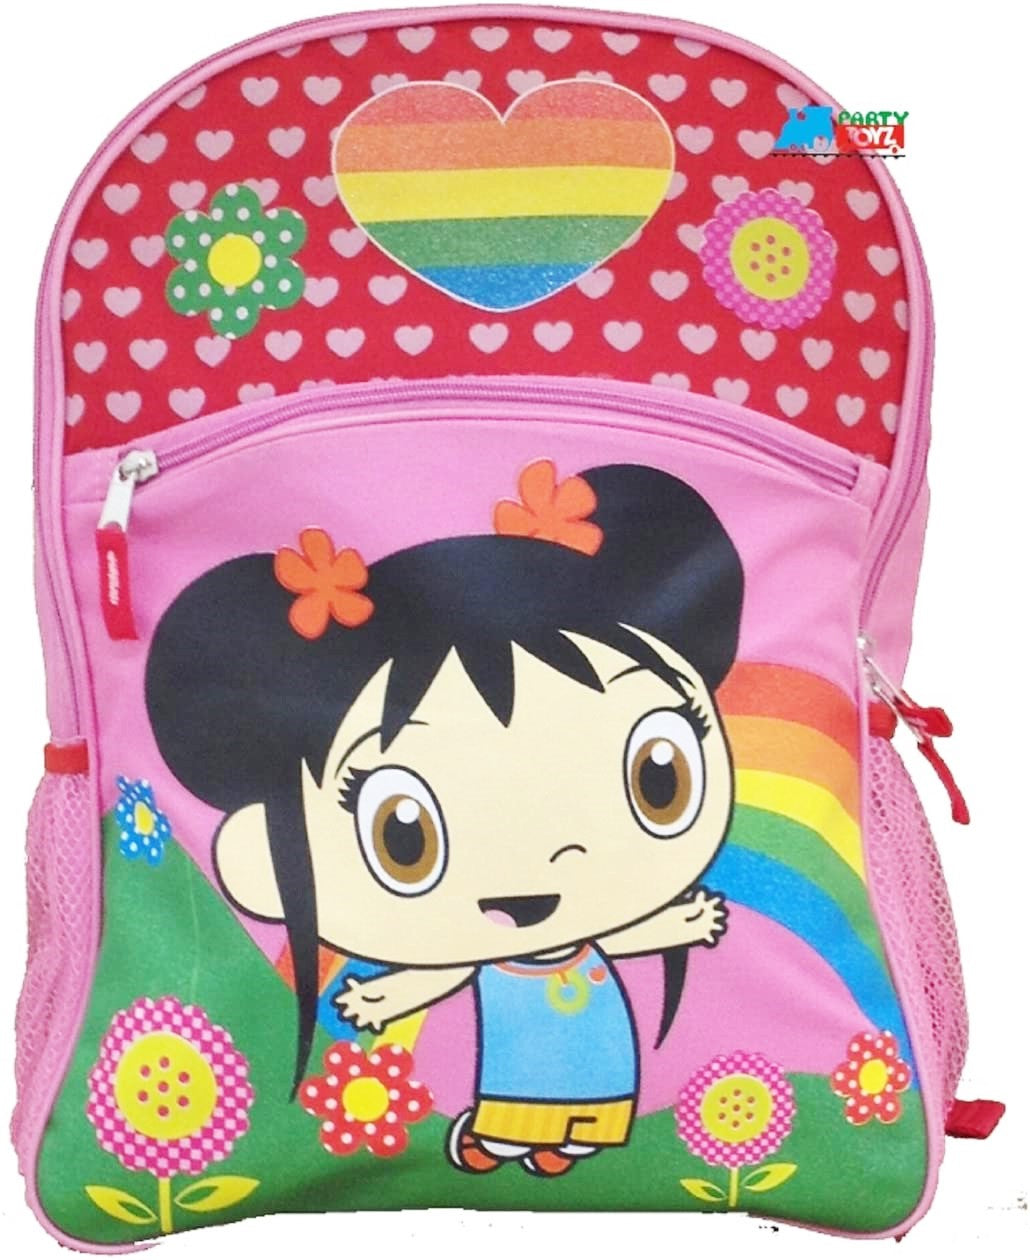 Ni Hao Kai Lan Backpack Large 16 inch Rainbow Heart